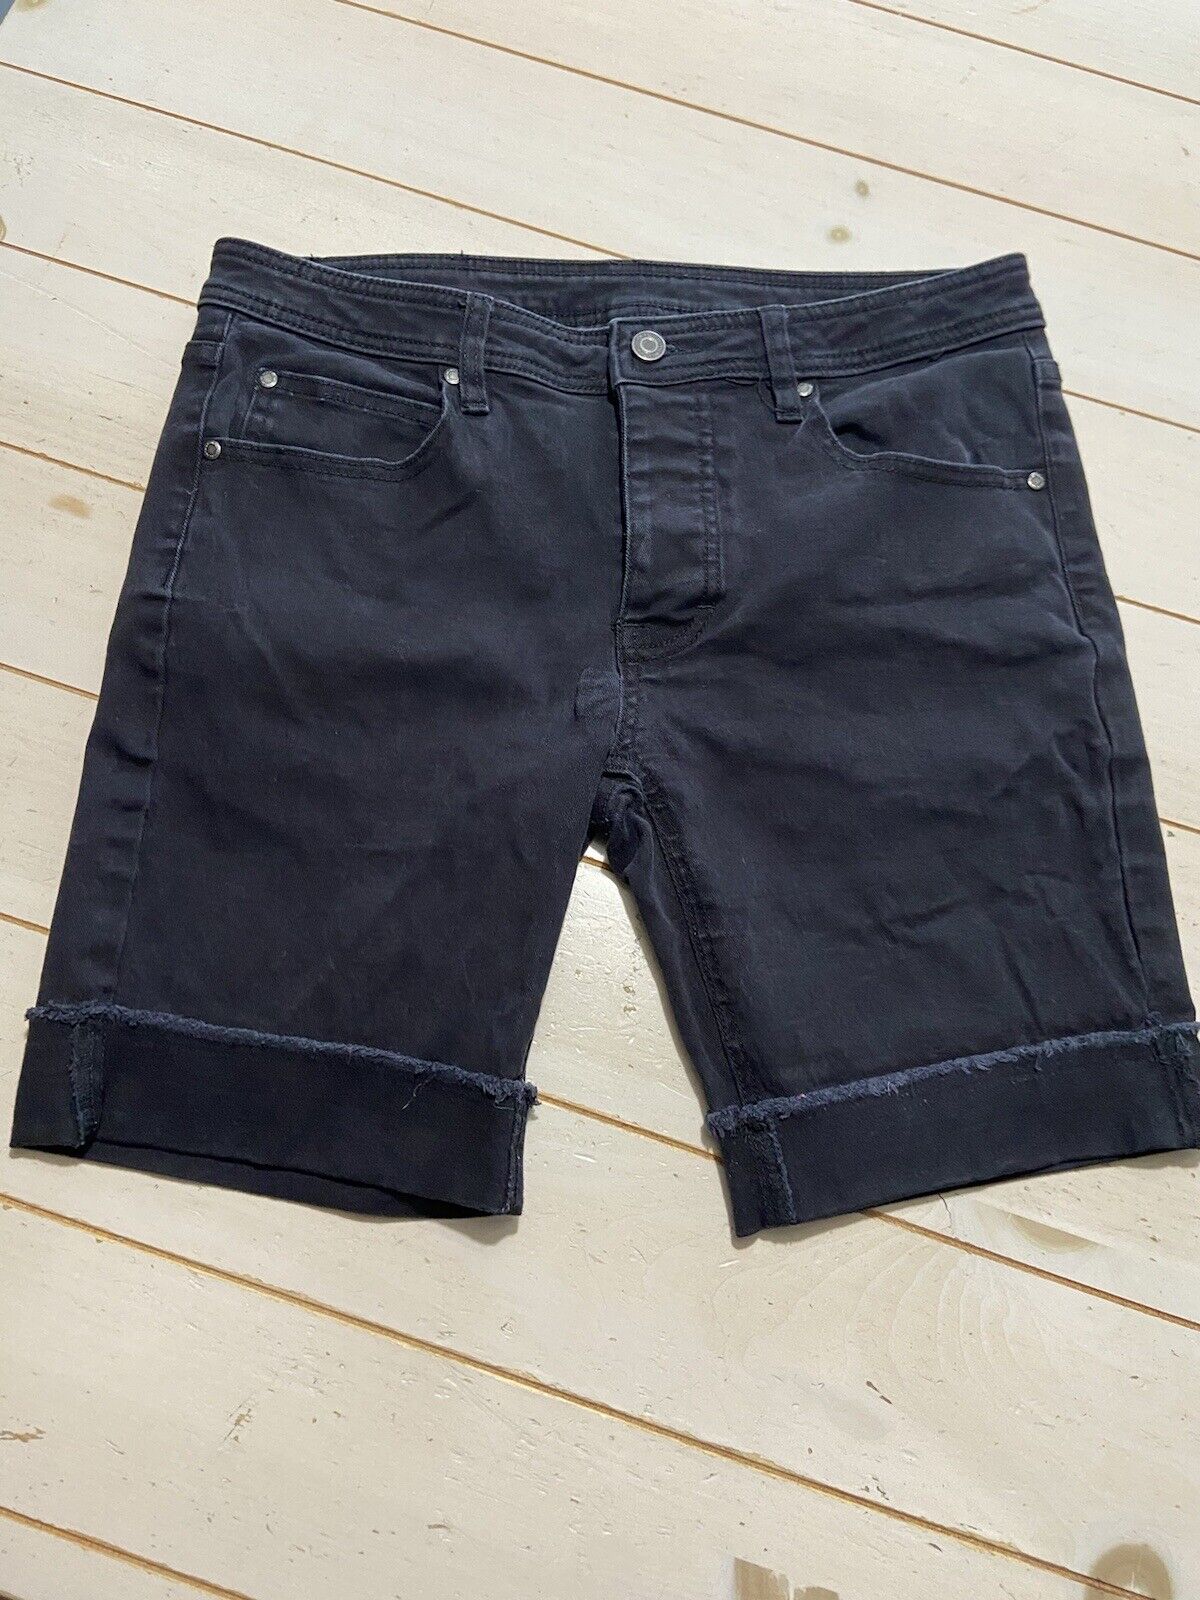 Nasty Pig Men’s Black Denim Shorts Size 32 Cuffed 8”